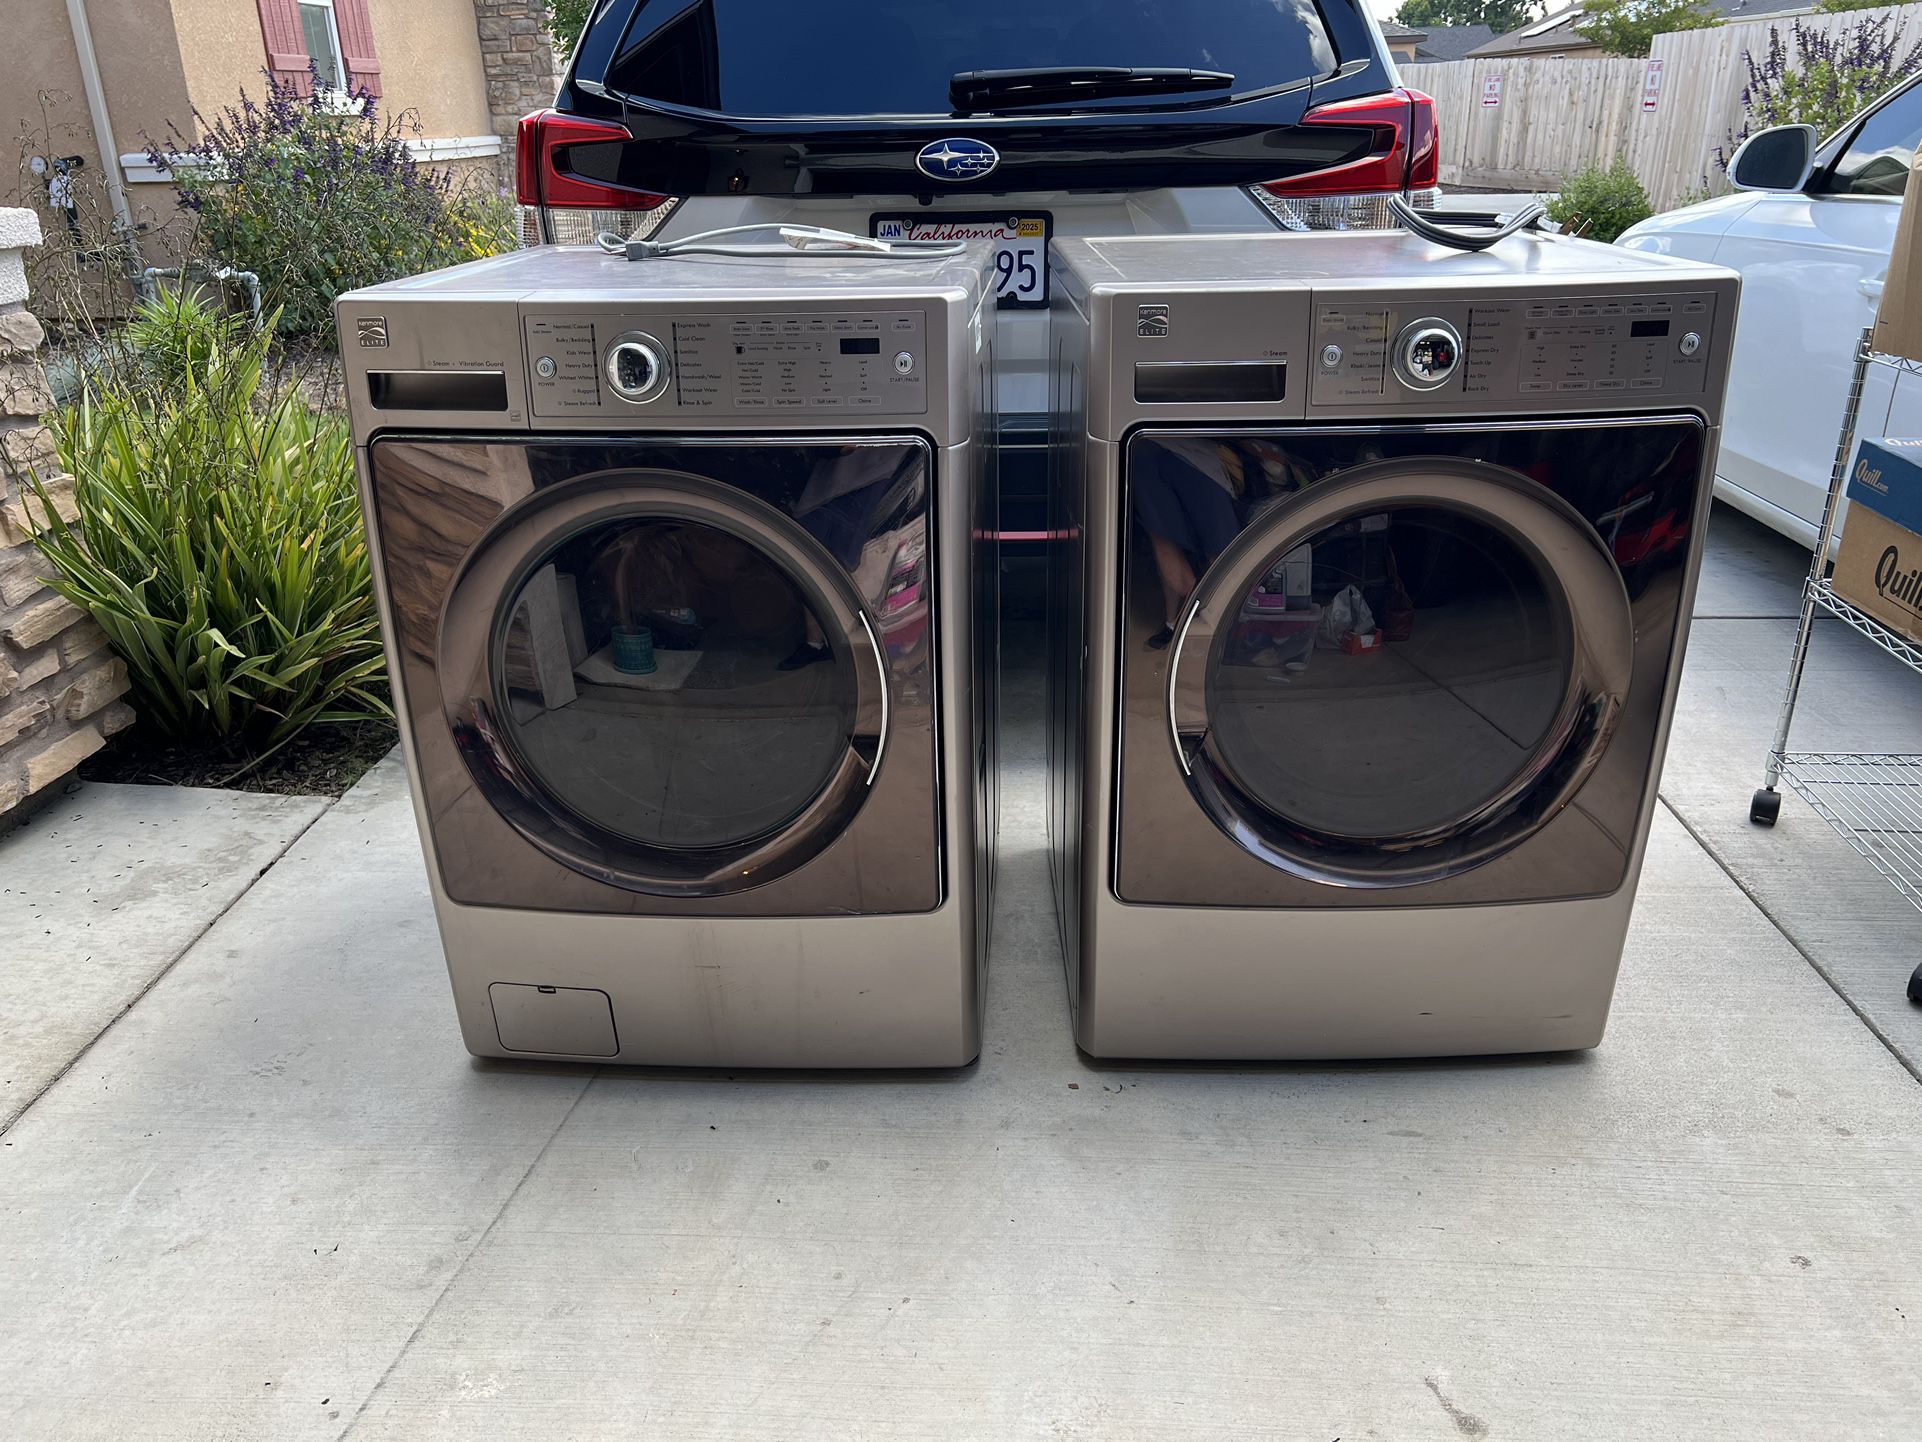 Electric kenmore Elite Washer Dryer Set